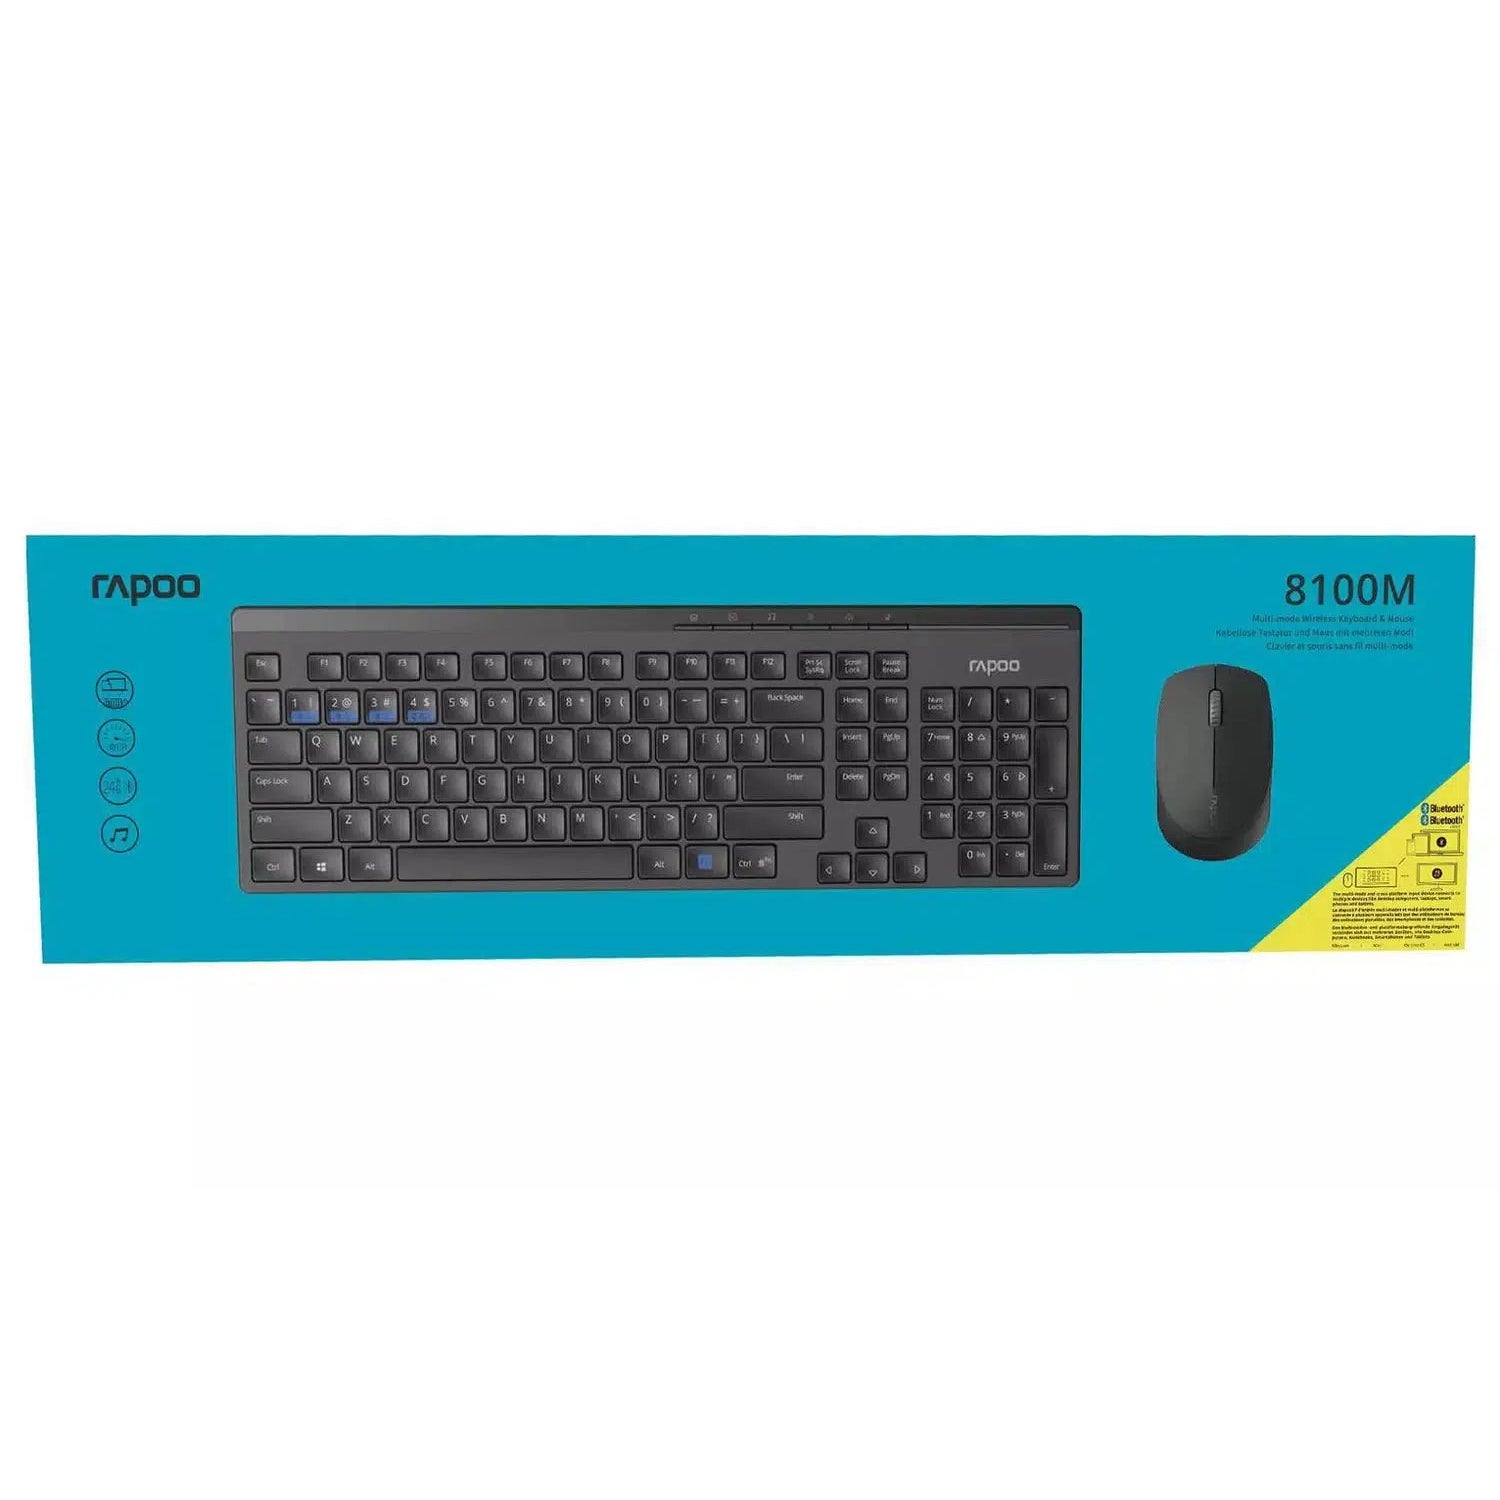 Rapoo 8100M Multi-Mode Wireless Mouse and Keyboard, Black - Refurbished Good